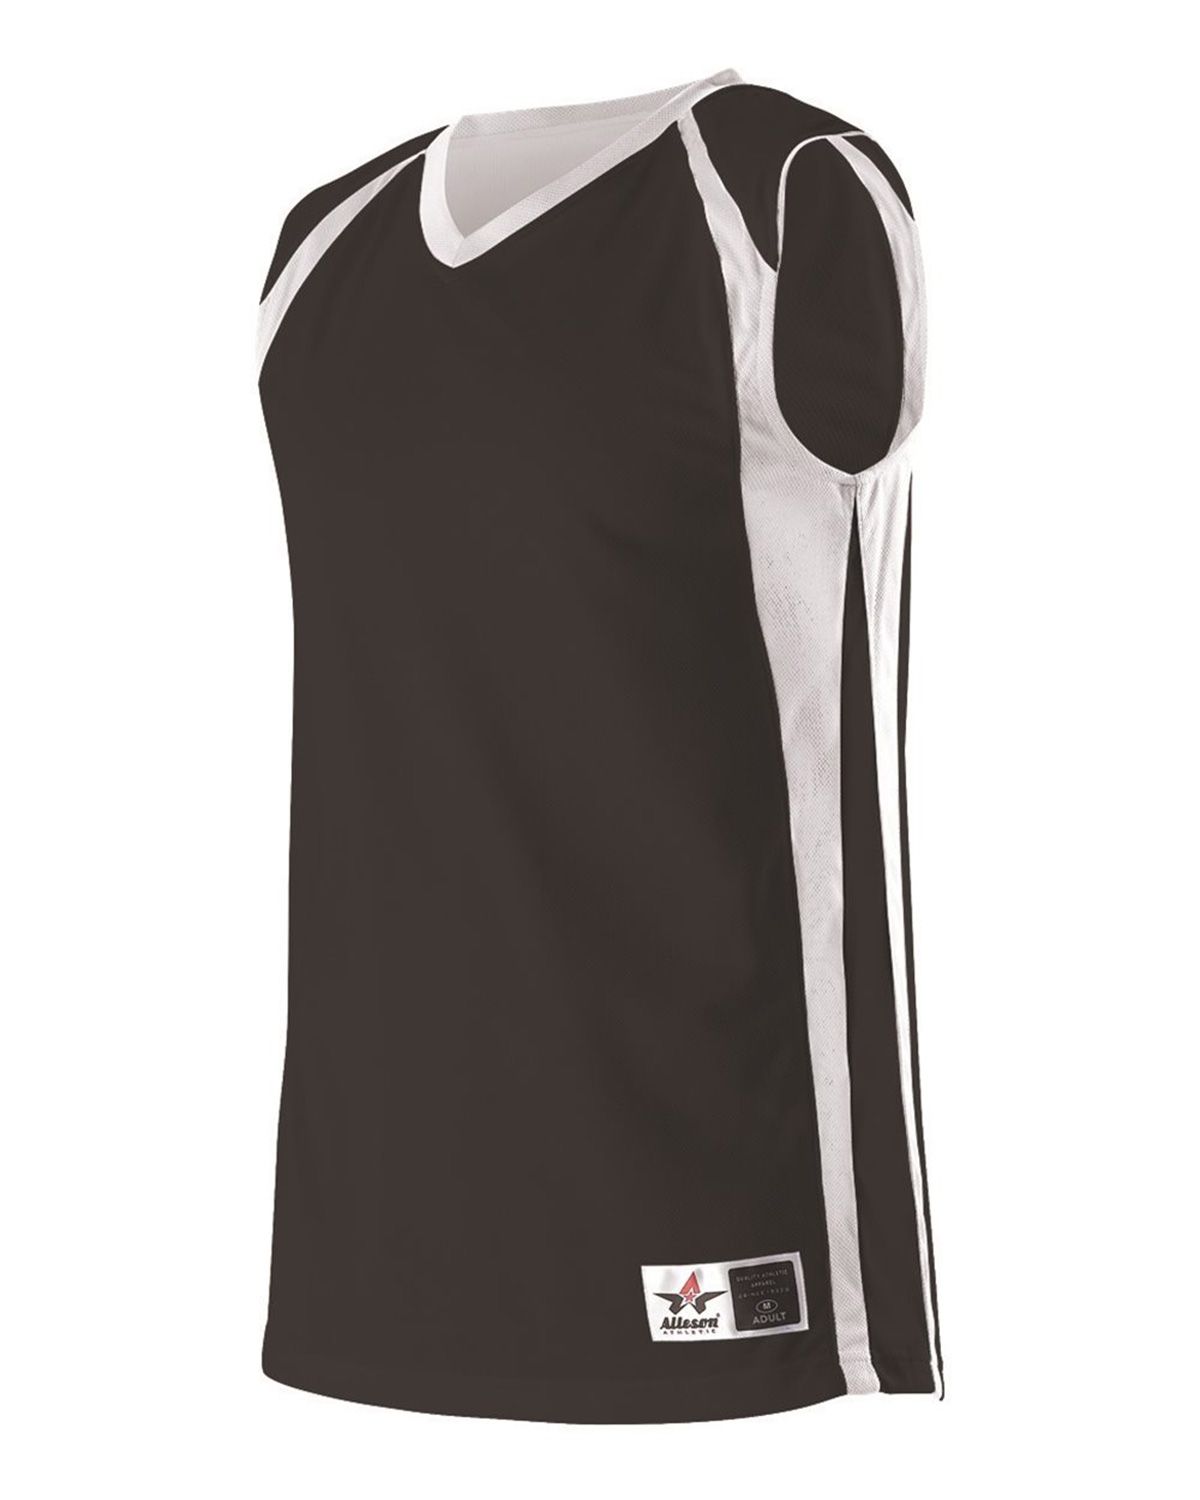  Nike Men's Dri -FIT Big Logo Sleeveless Basketball Jersey  (Midnight Navy/White/University Red, Large) : Clothing, Shoes & Jewelry